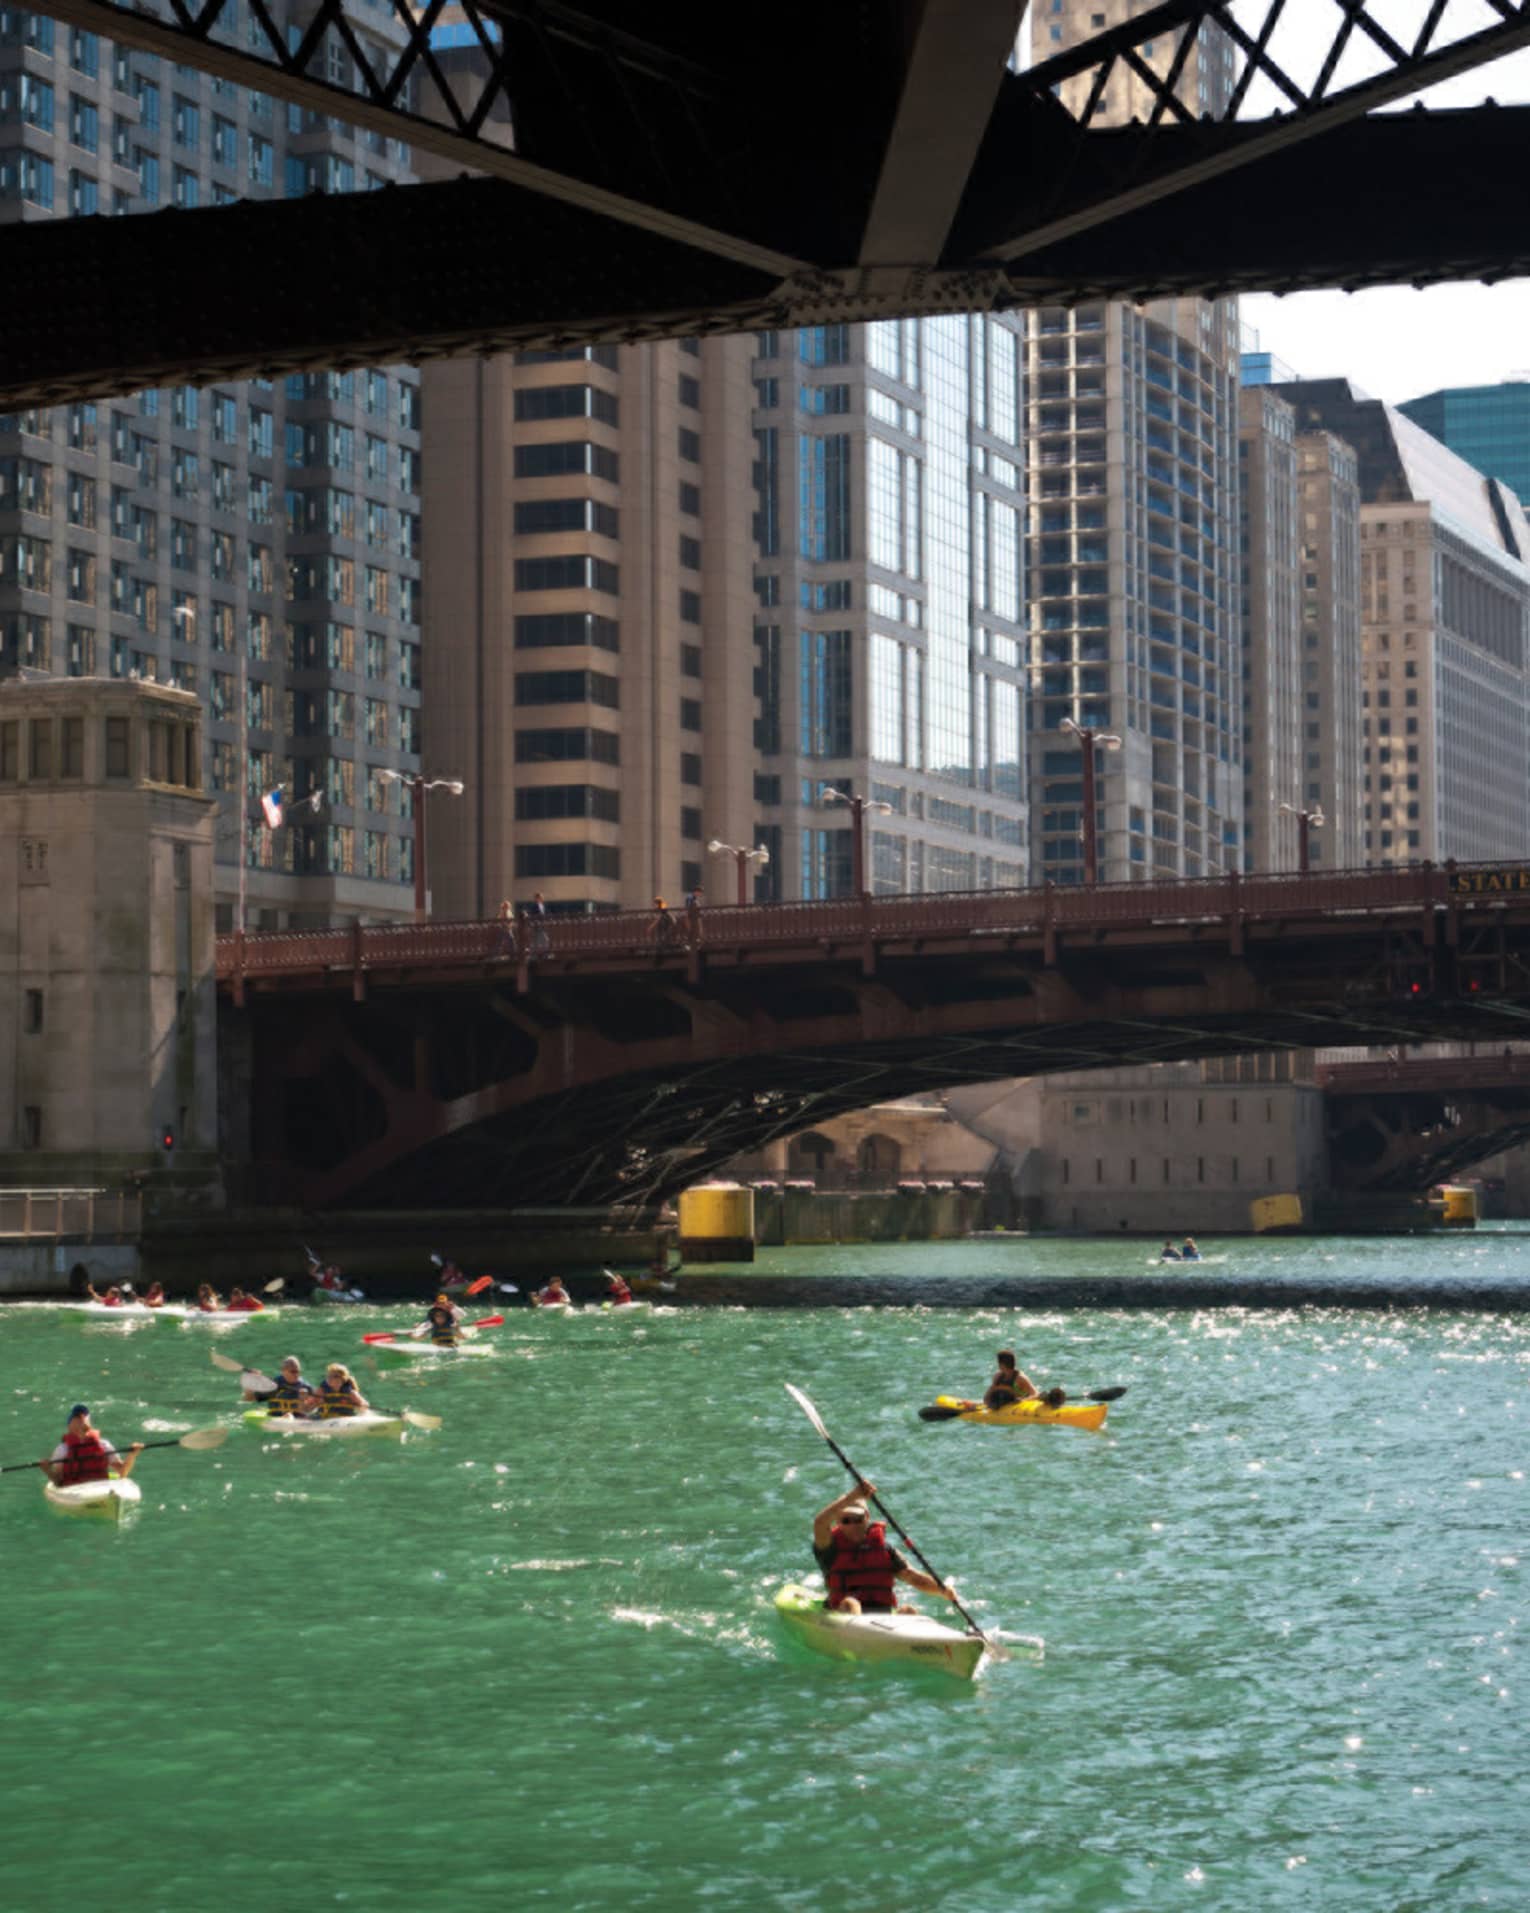 People kayaking on a river under a bridge.